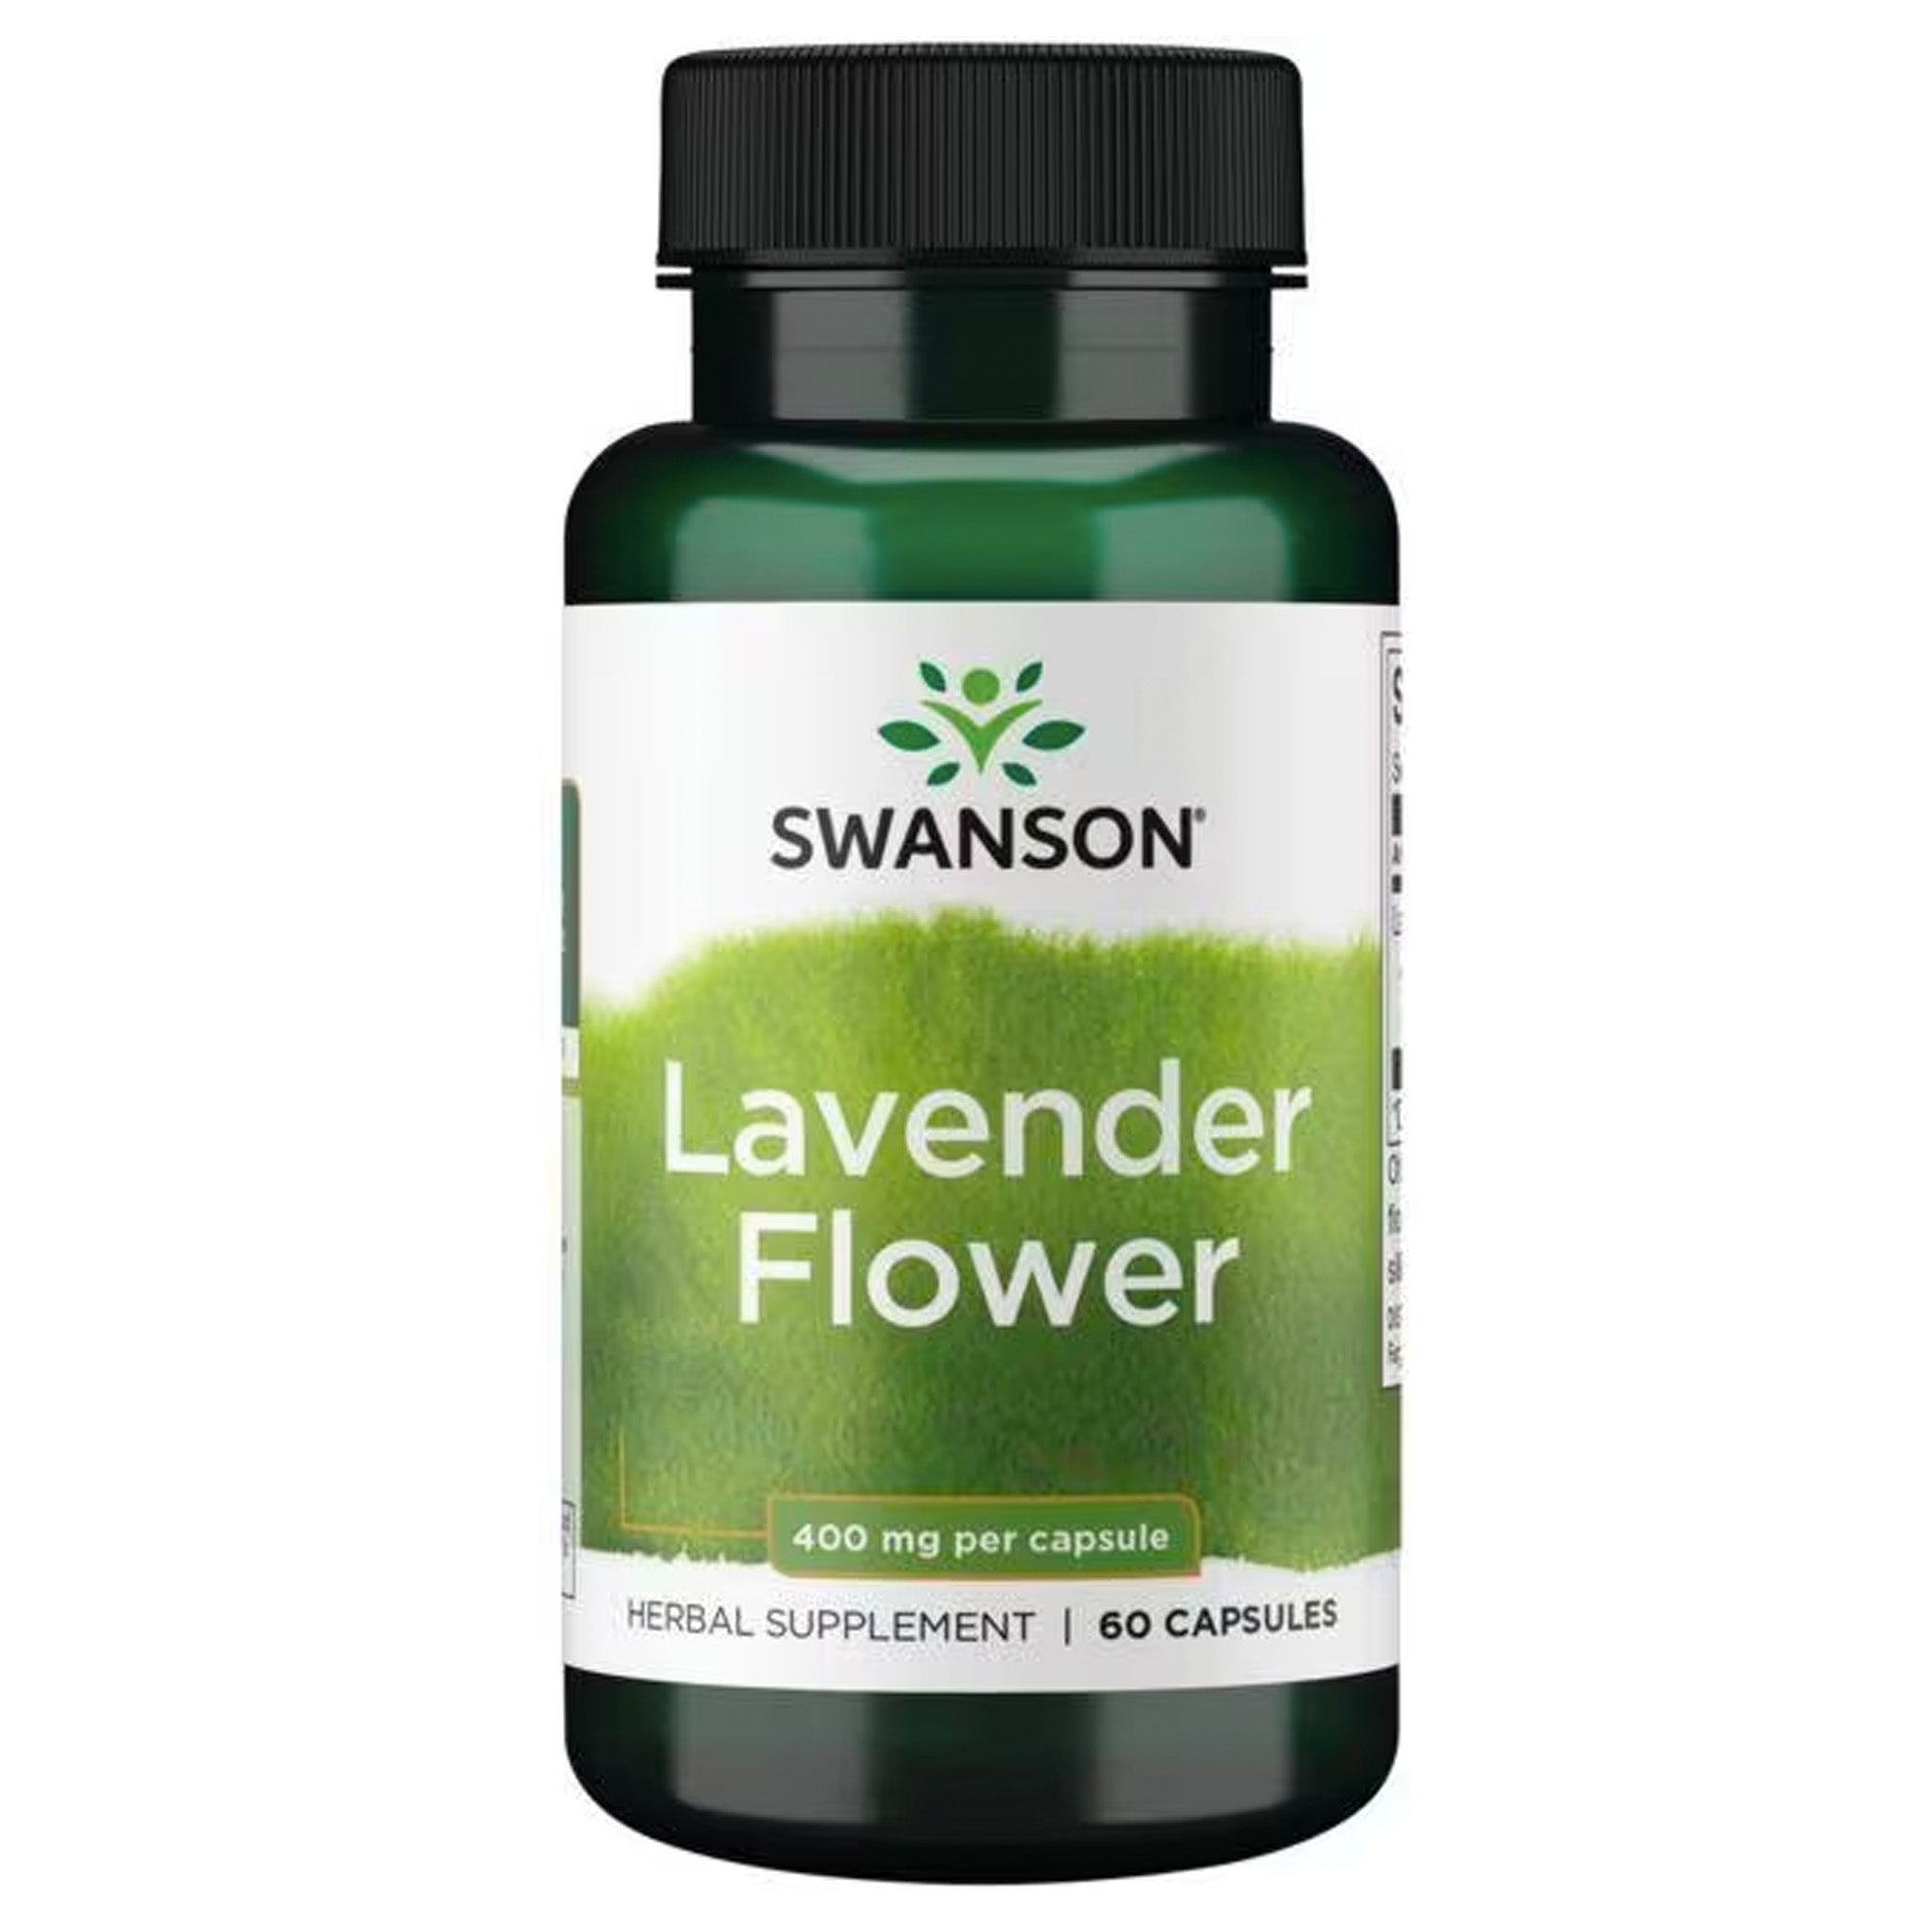 Swanson - Lavender Flower / Lavendel Bloem (Lavandula officinalis) - 4:1 Extract - 400mg - 60 Capsules